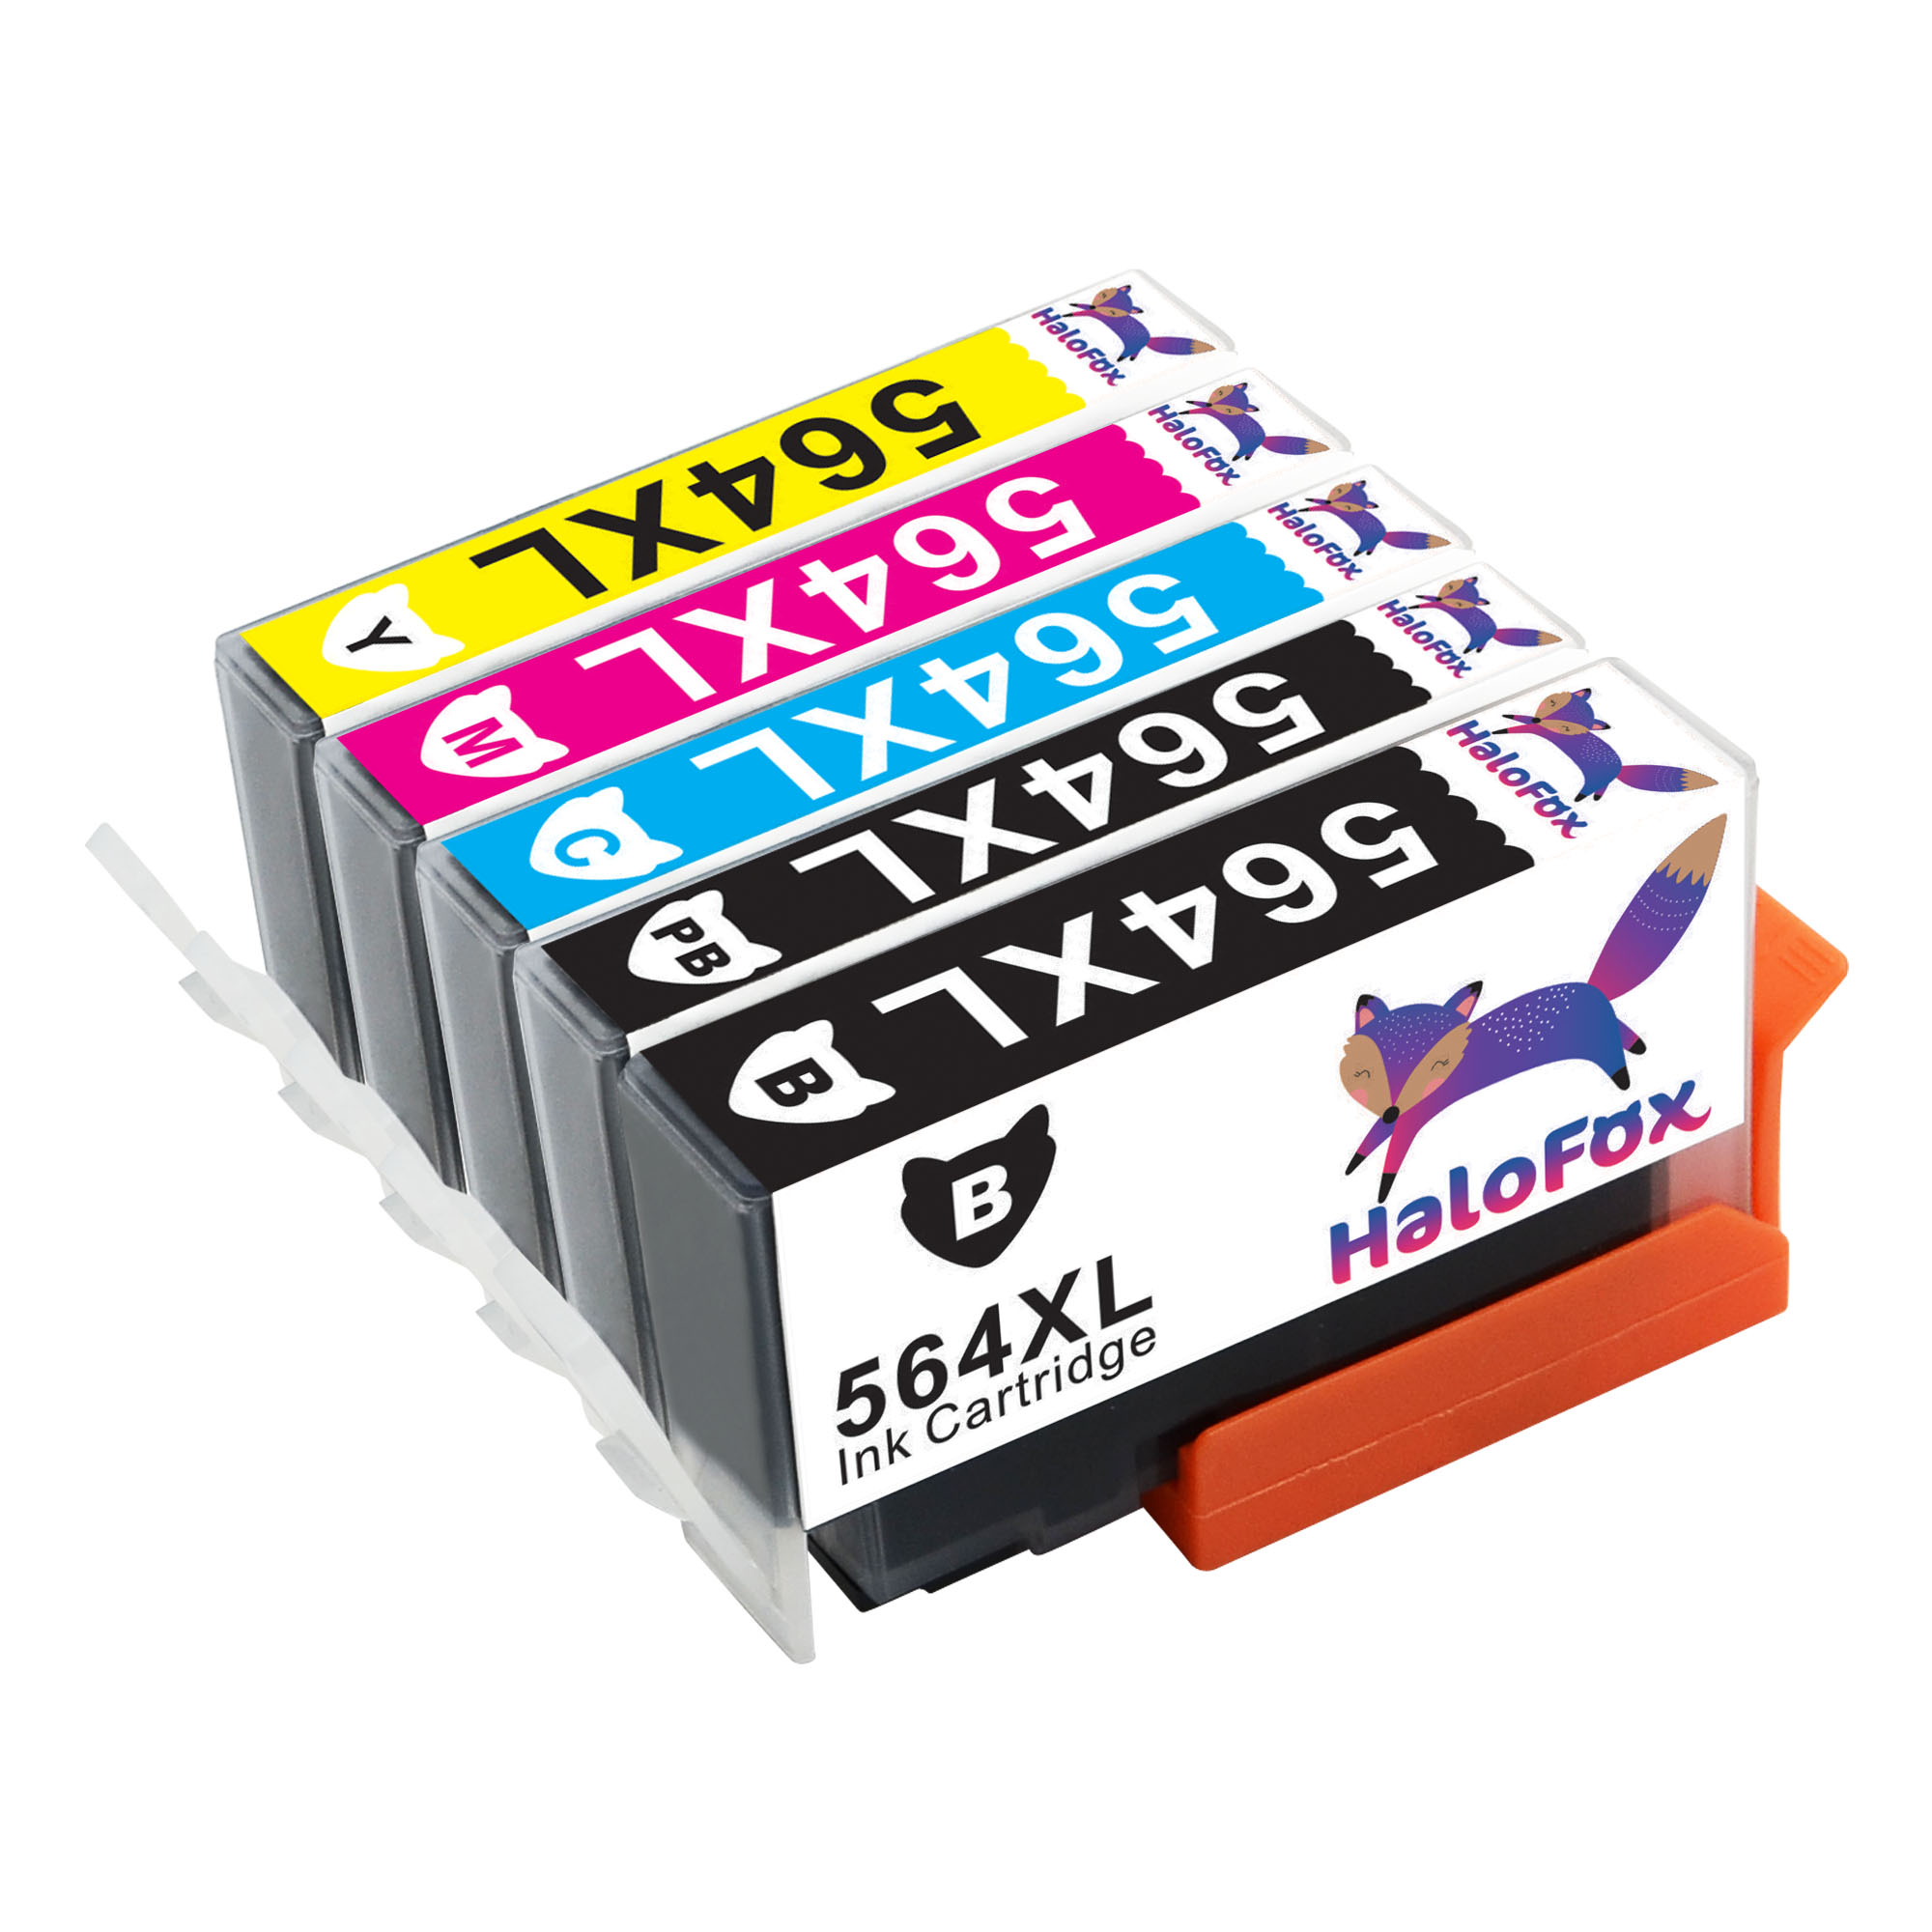 5PK Ink Cartridges Replacement 564XL for HP Photosmart 7520 5520 6520 7510 7525 5510 6510